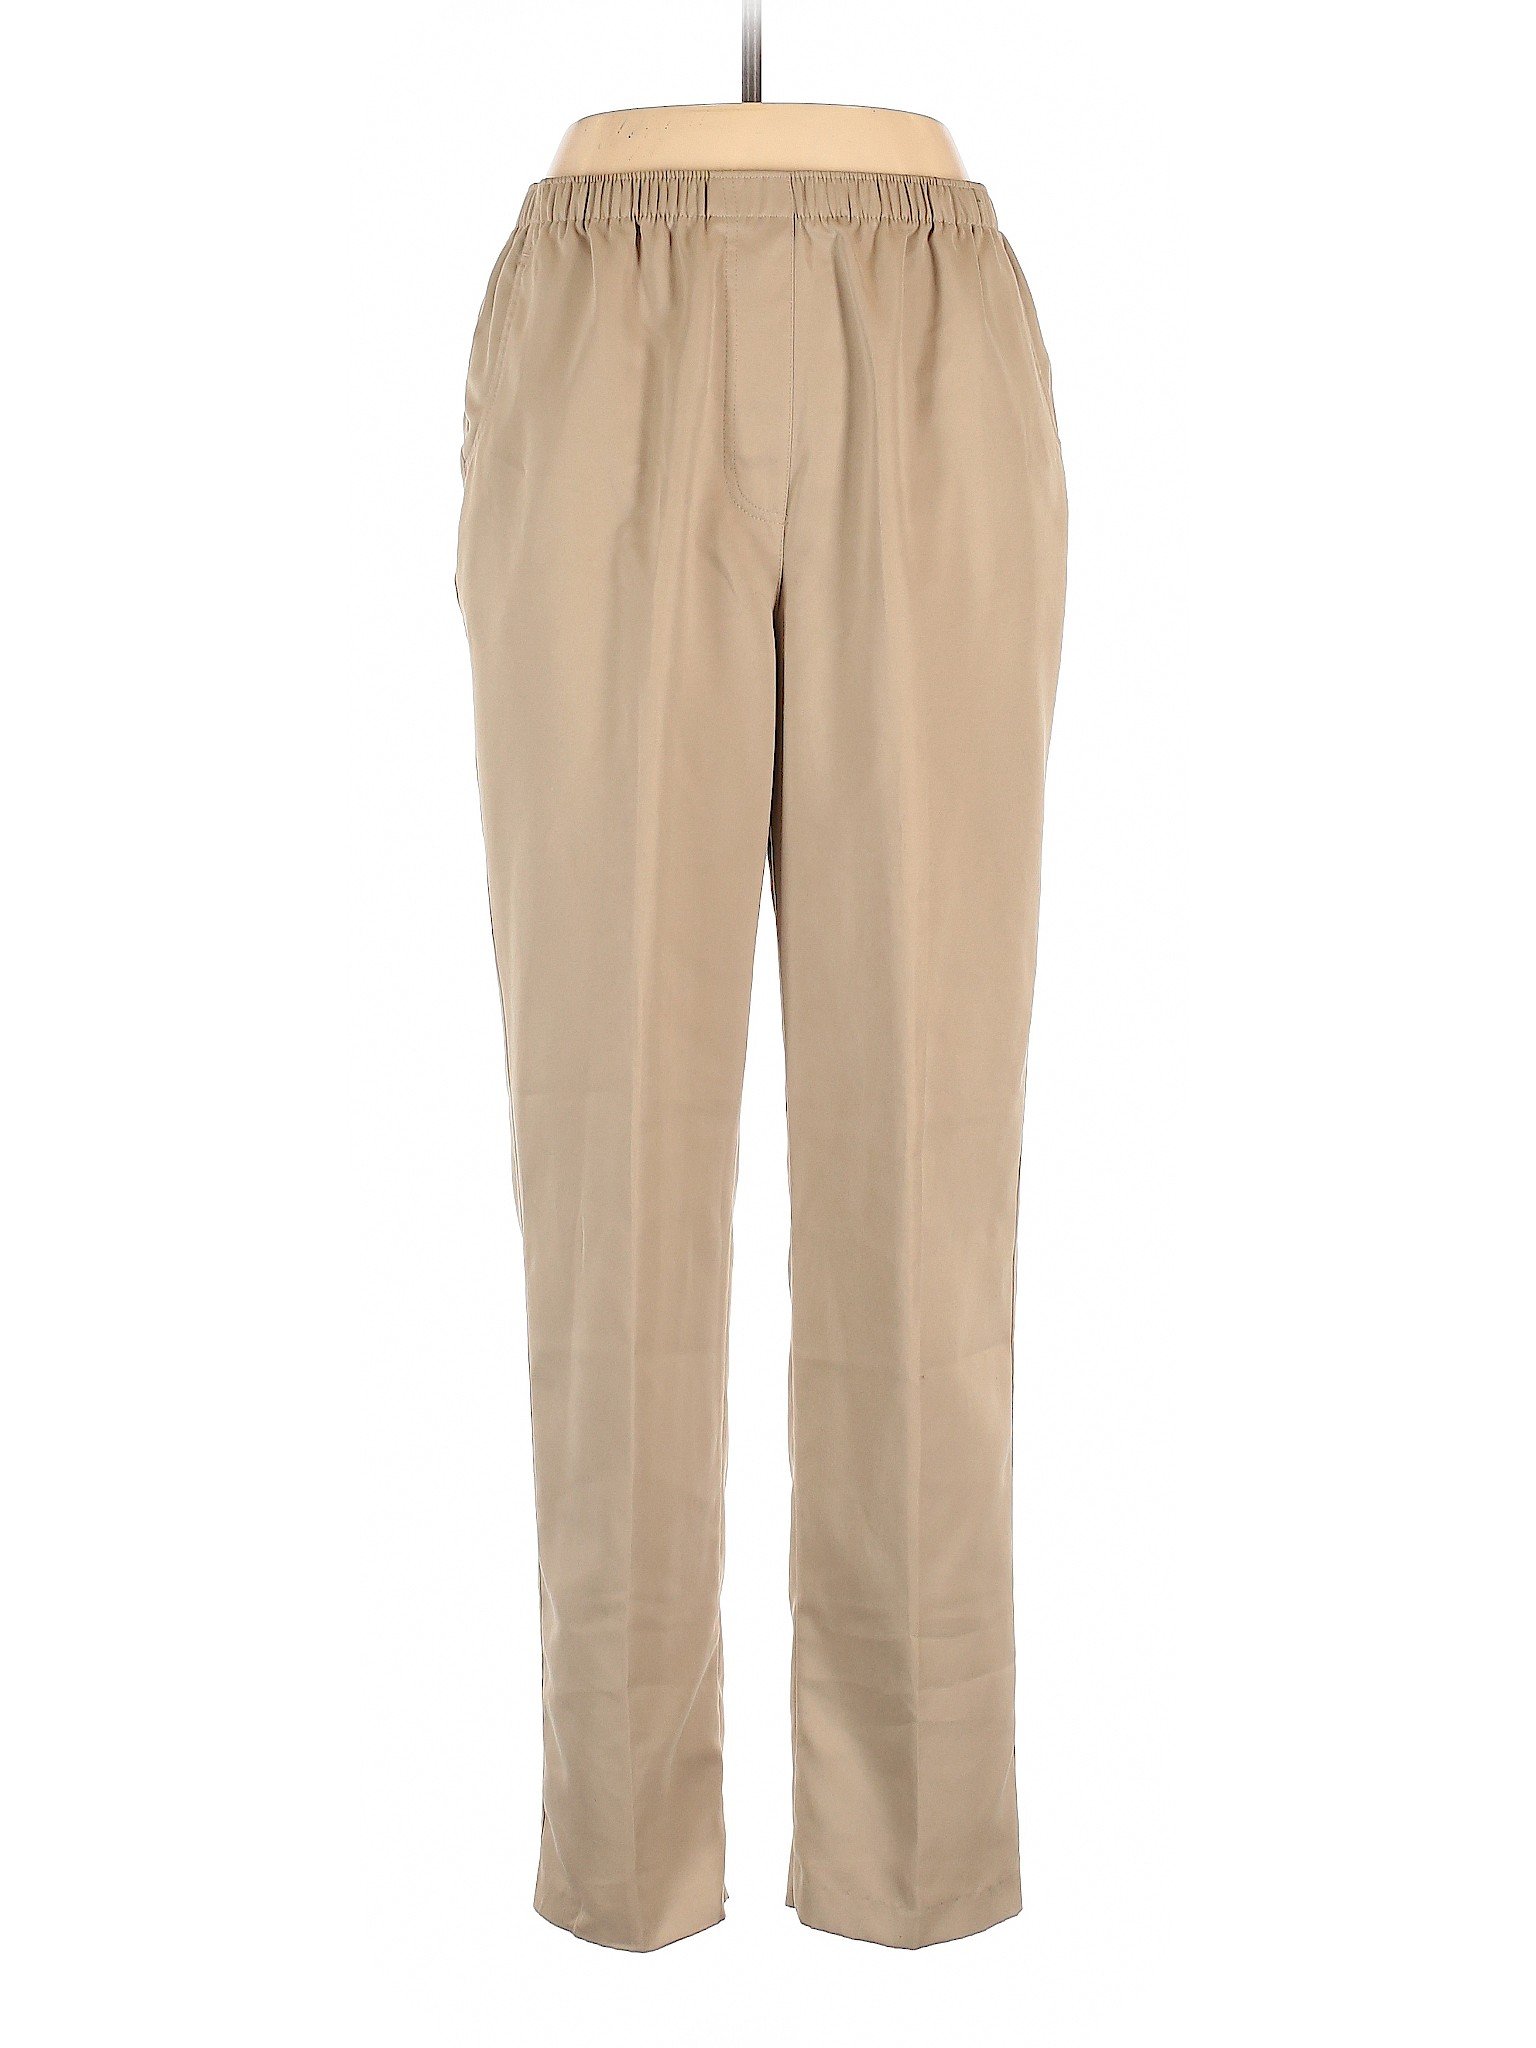 Alia Women Brown Dress Pants 14 | eBay